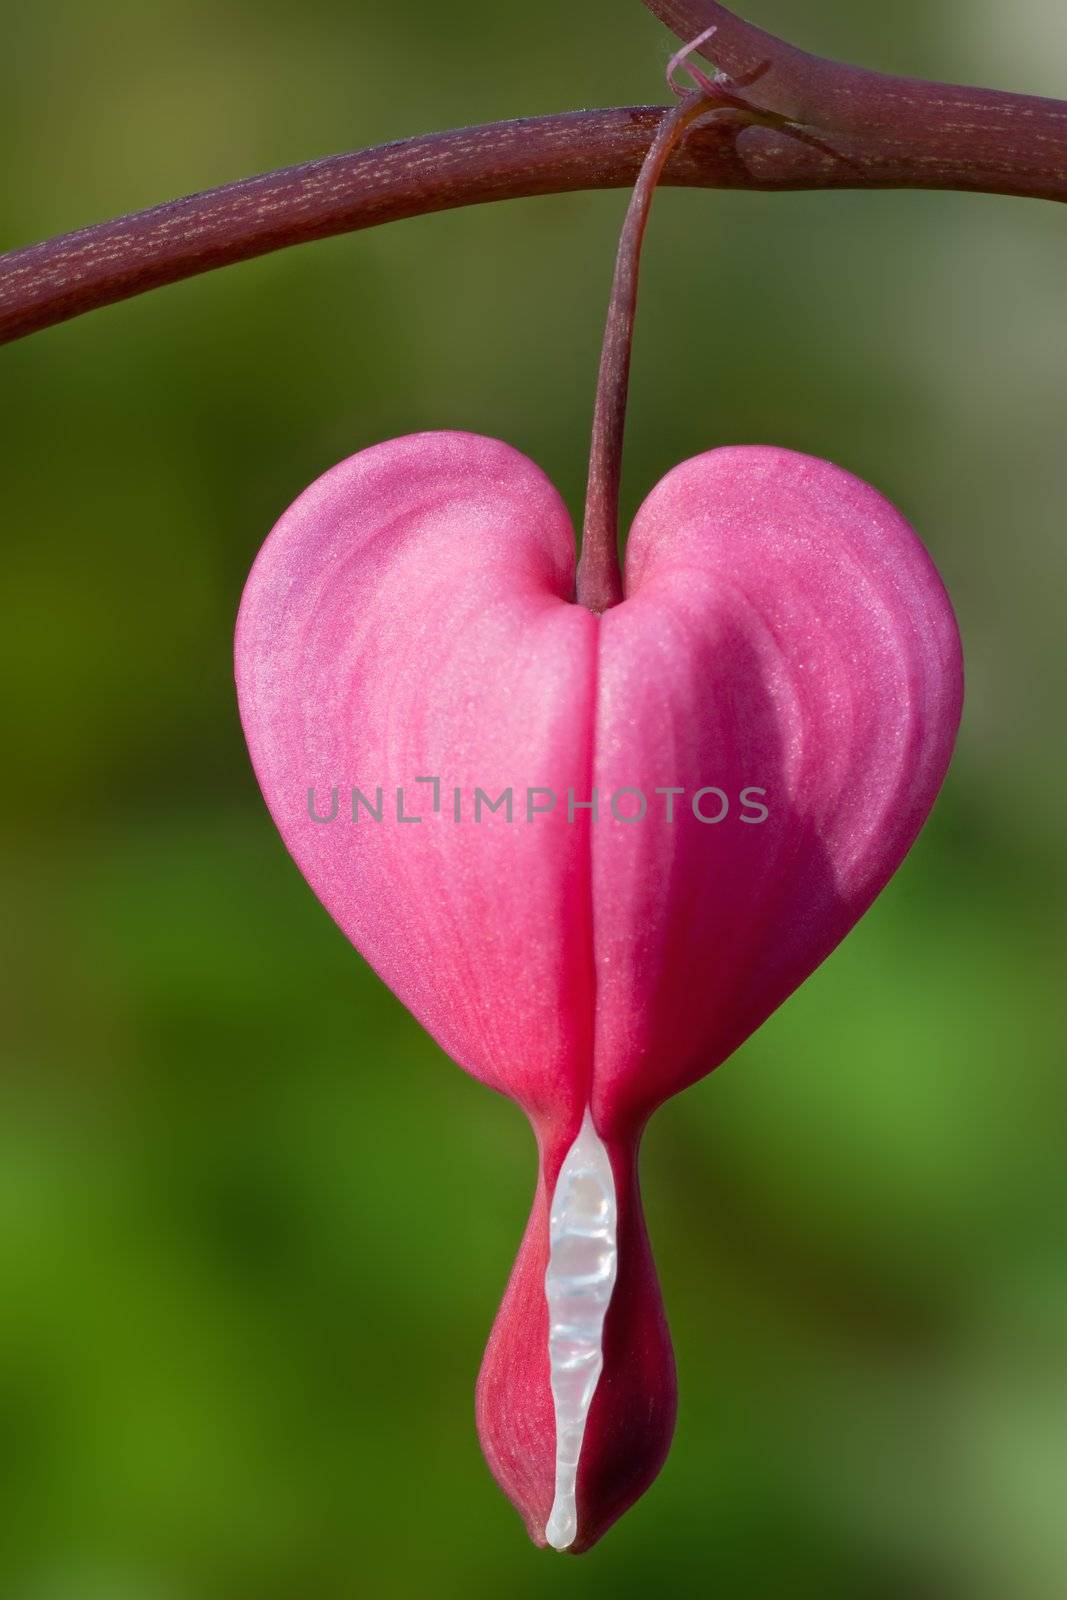 Heart flower by camerziga